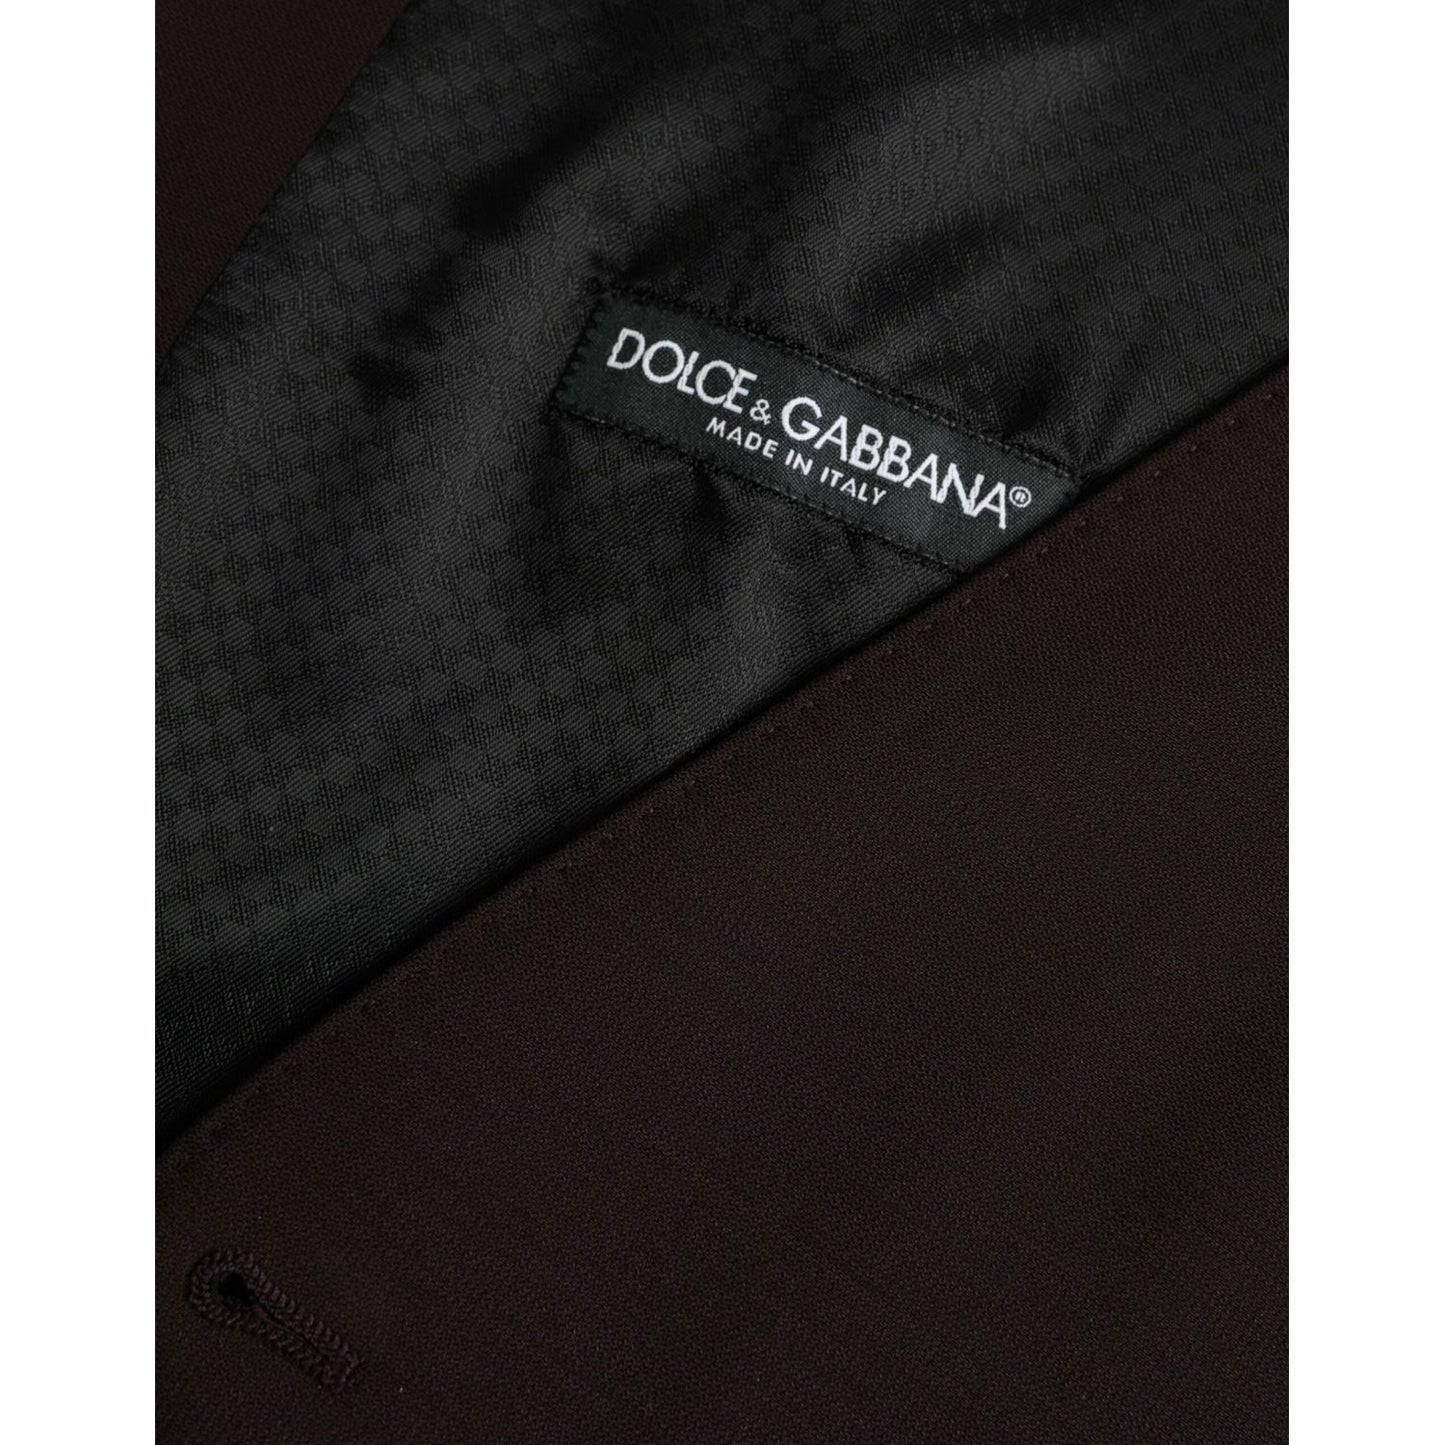 Dolce & Gabbana Brown Wool Waistcoat Dress Formal Vest brown-wool-waistcoat-dress-formal-vest